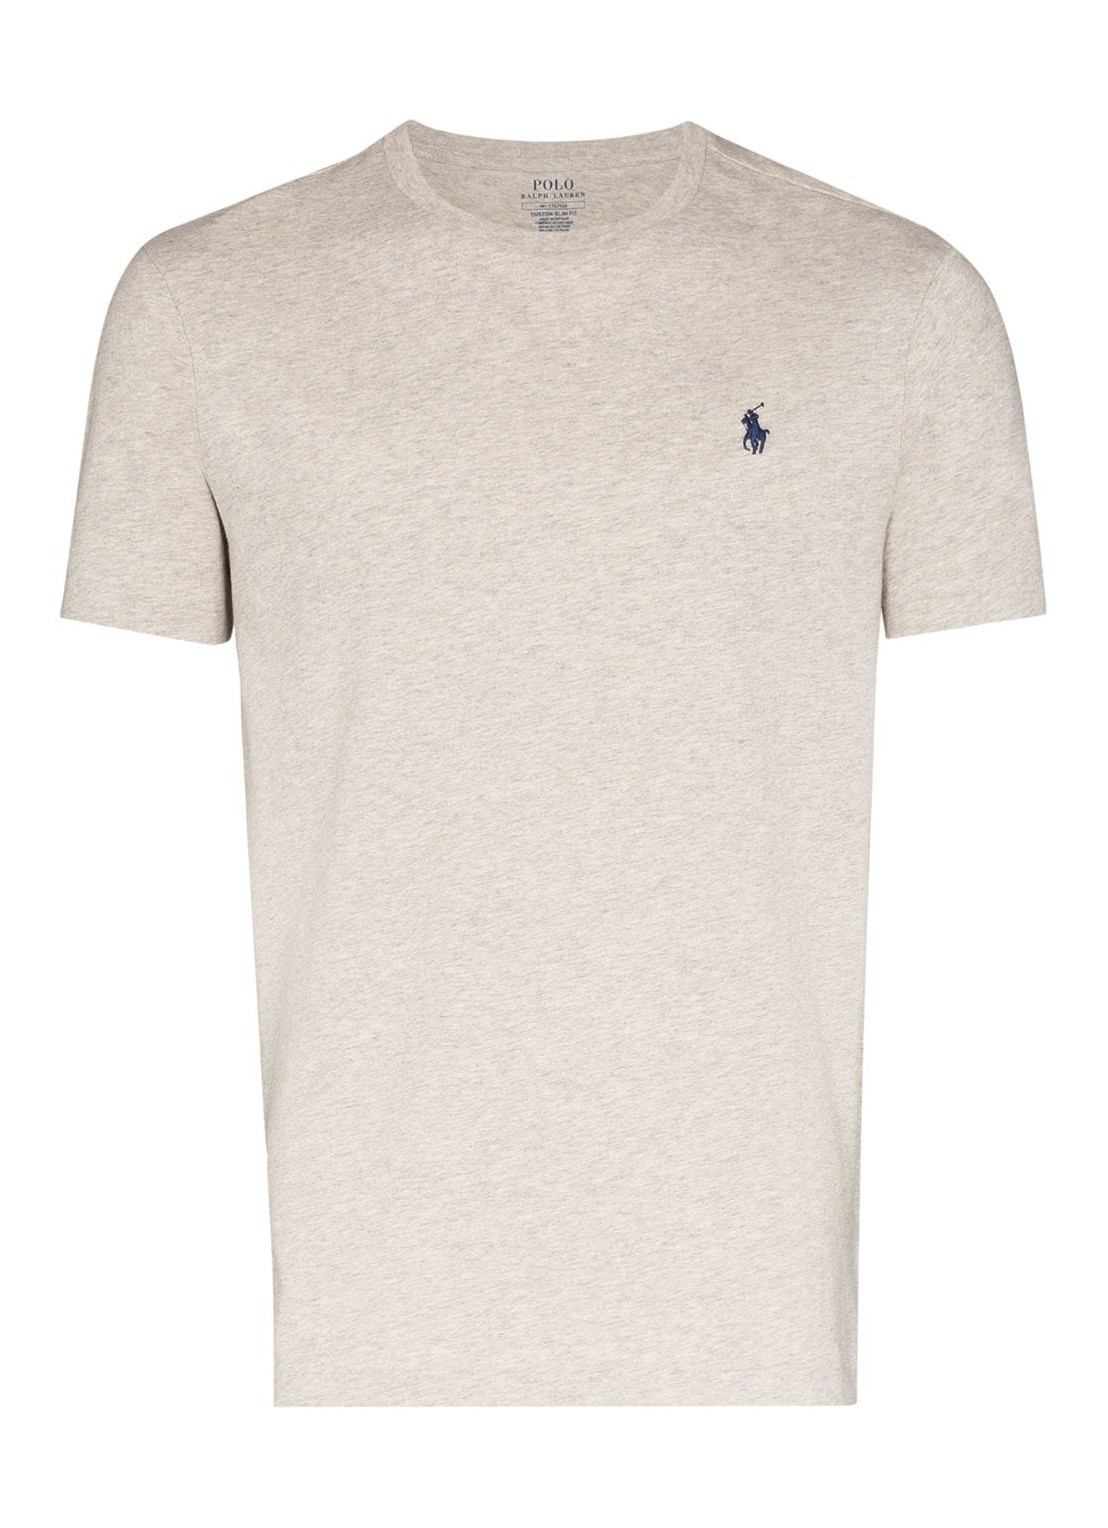 Camiseta polo ralph lauren jersey ssl tshirt - 710680785002 new grey heather talla gris
 